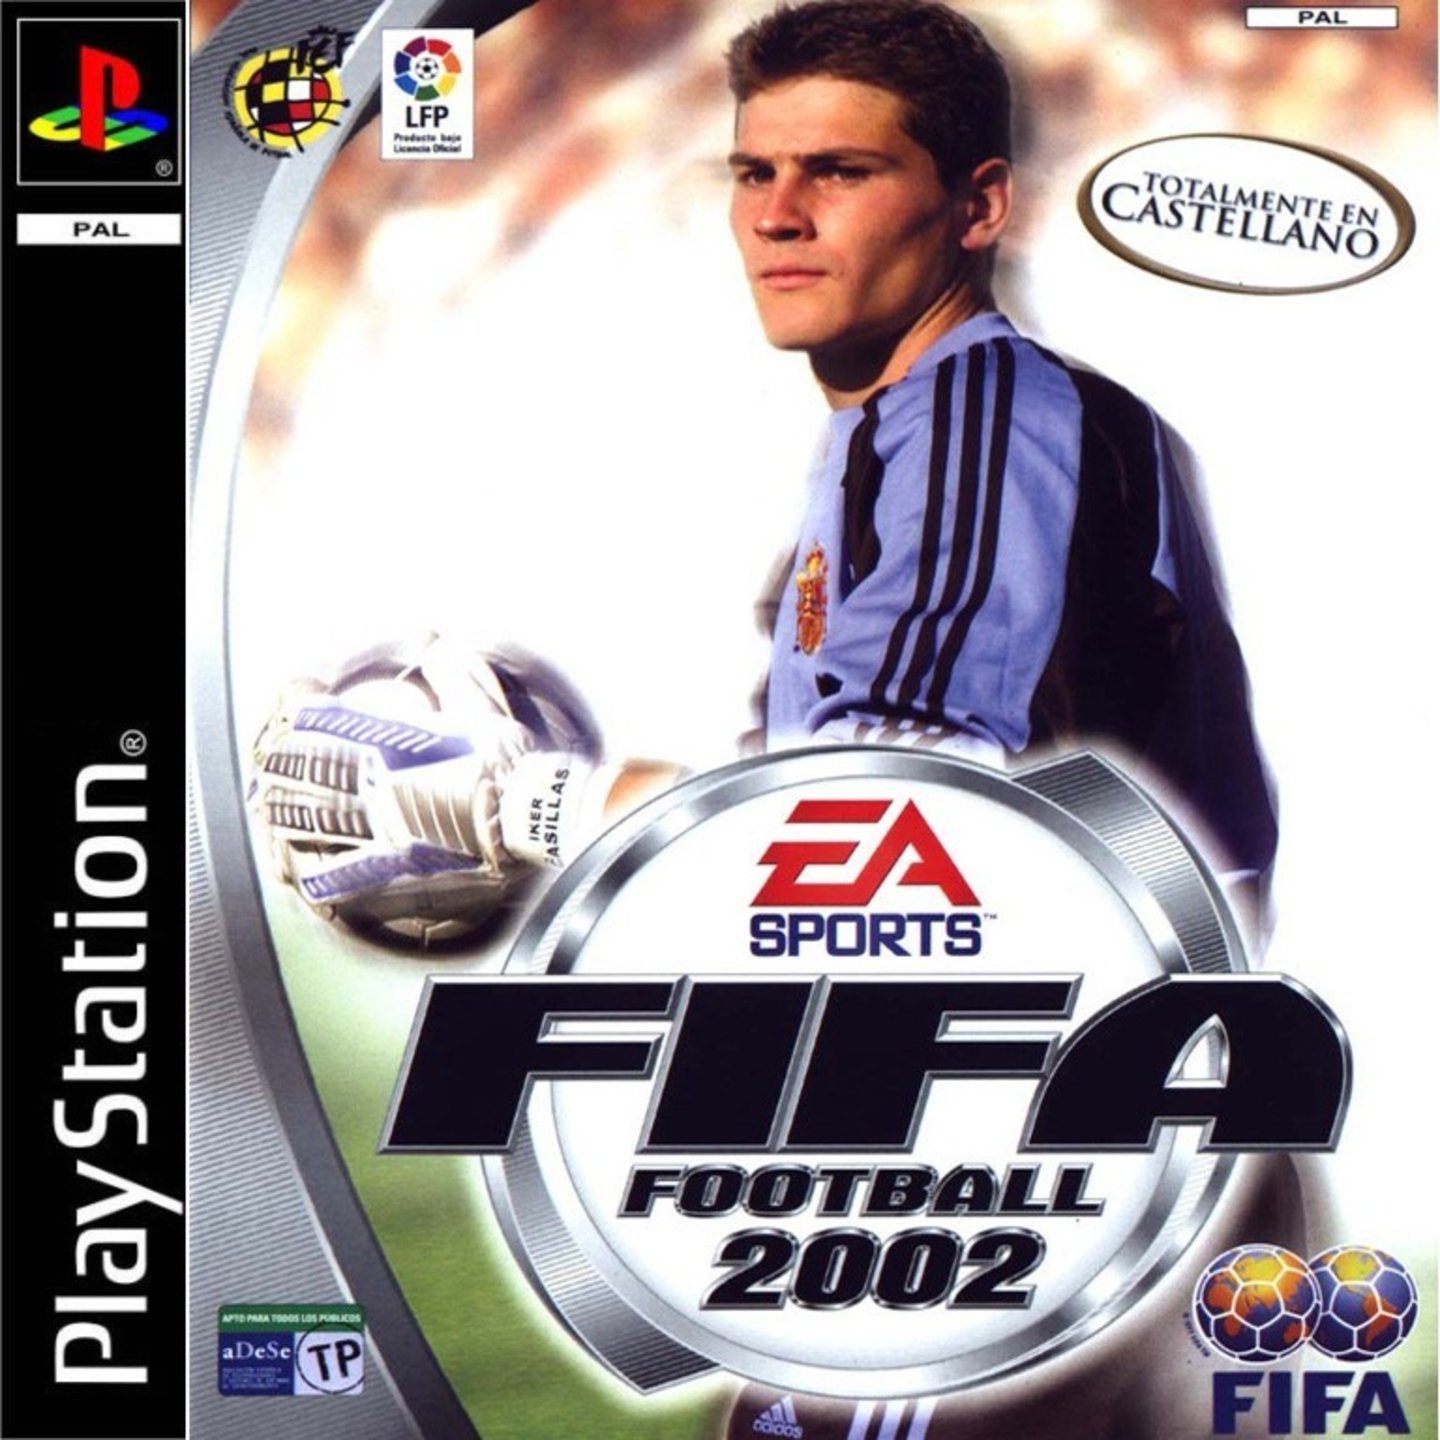 Fifa ps1. FIFA 2002 ps1 Cover. Сони ПС 2 ФИФА 2002. Диск ФИФА 2001. FIFA 2002 обложка ps1.